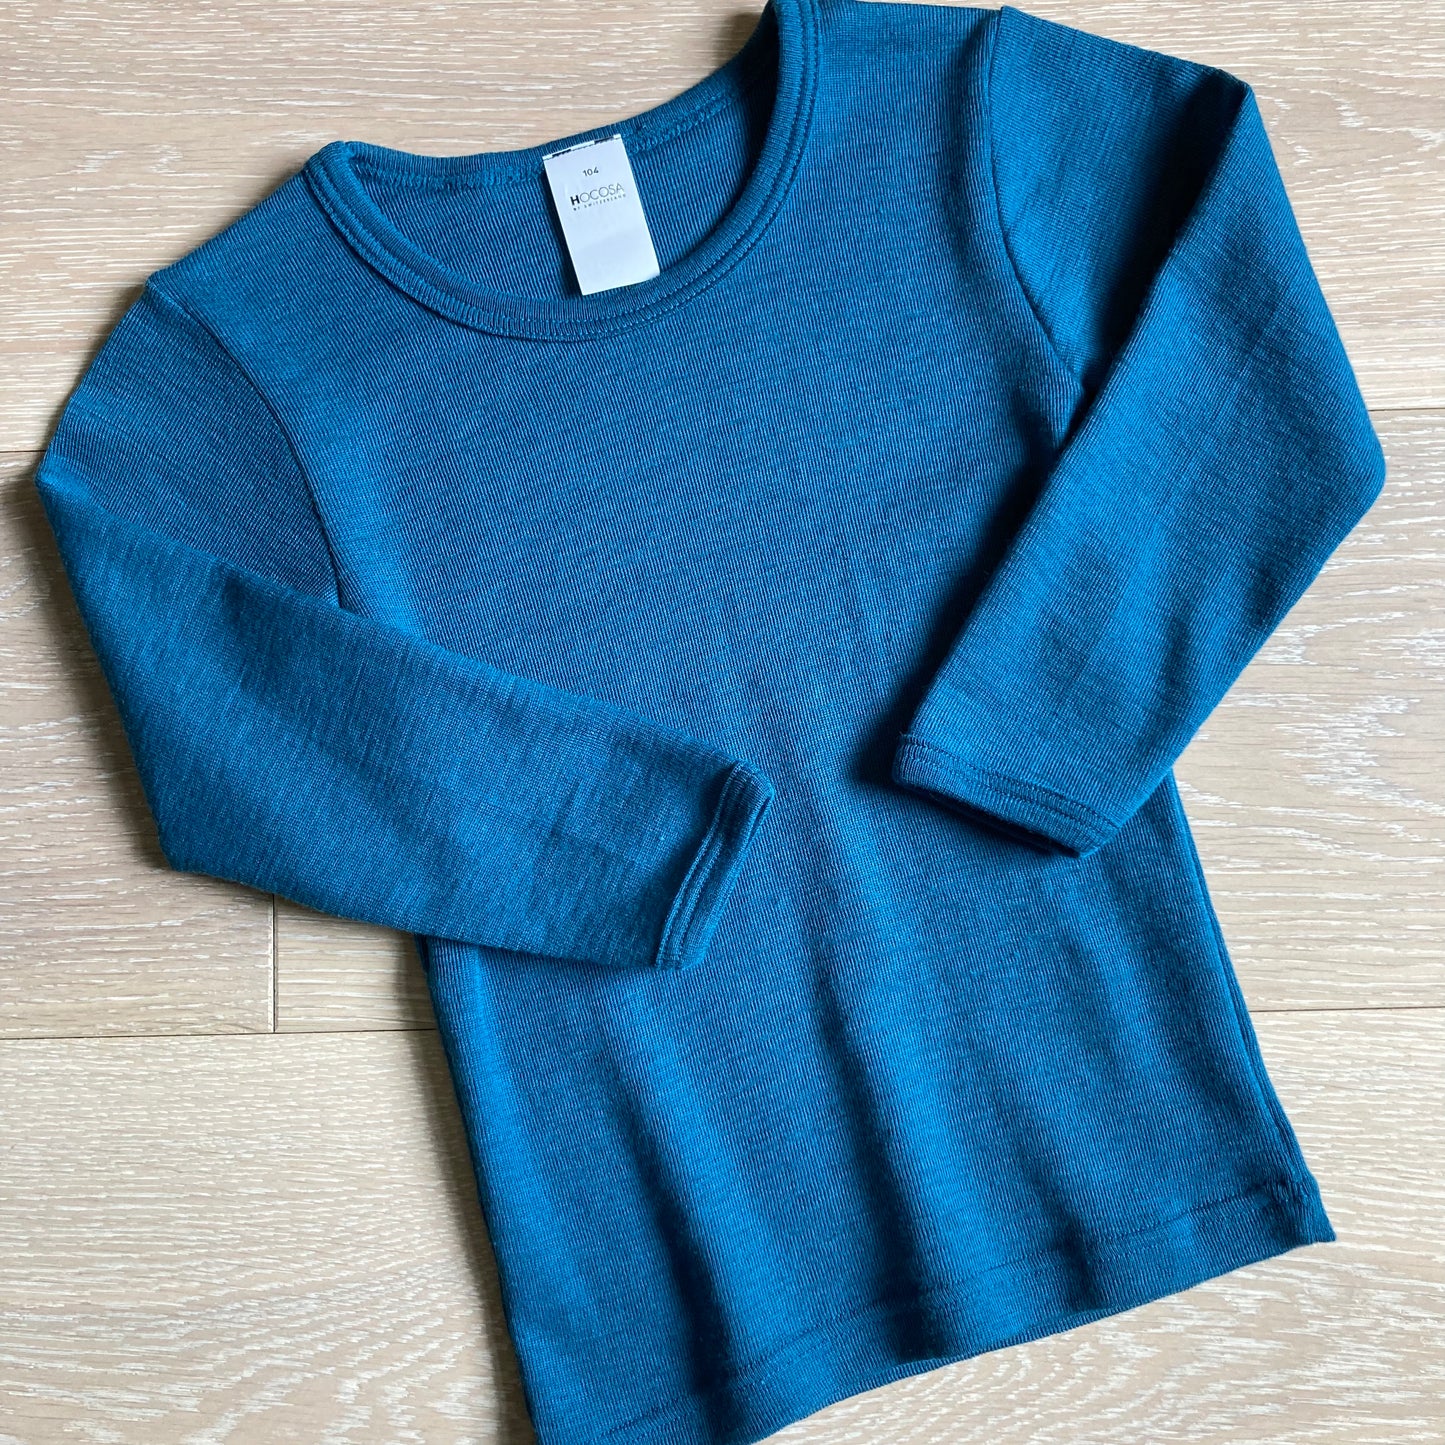 Hocosa Child Long Sleeve Shirt, Wool/Silk